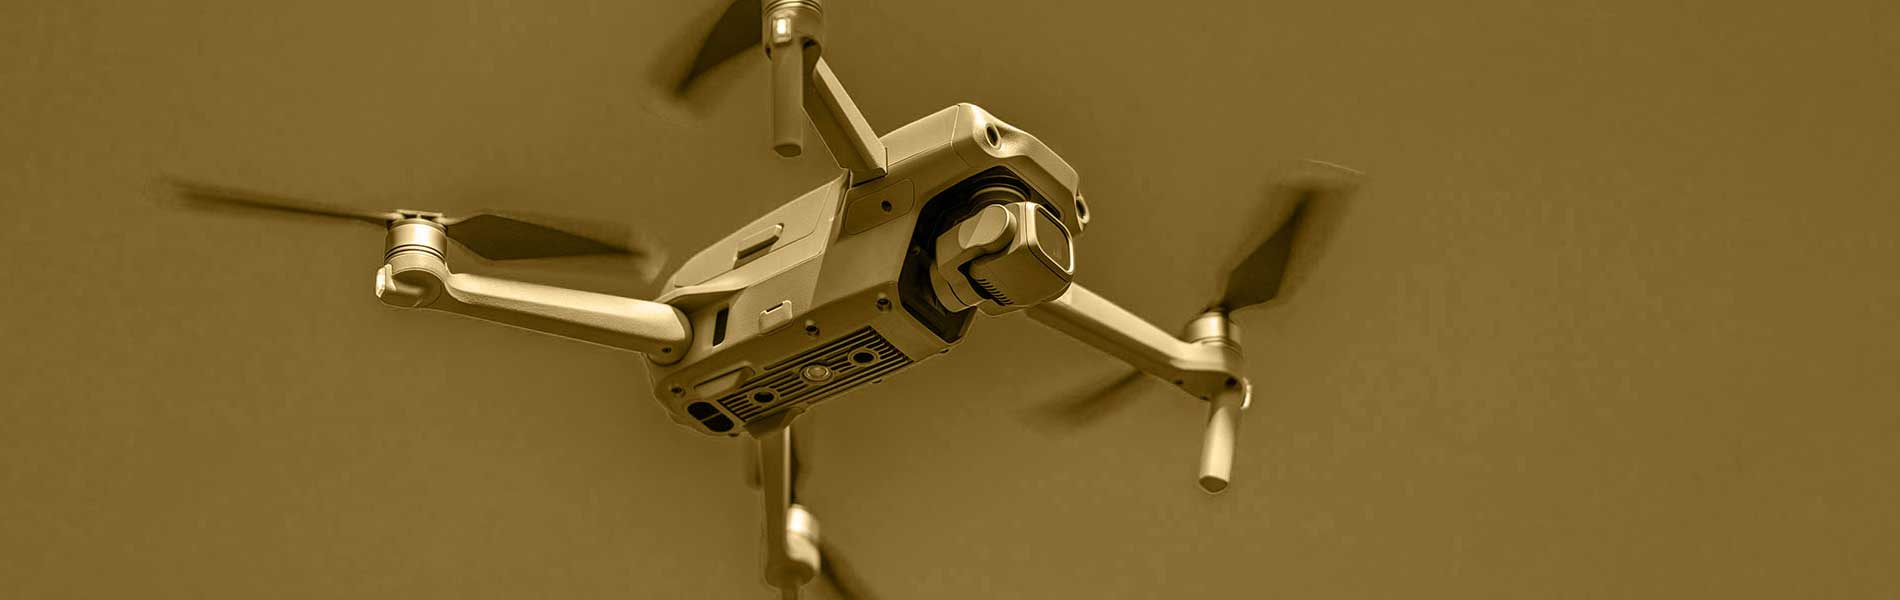 Prix film chantier drone